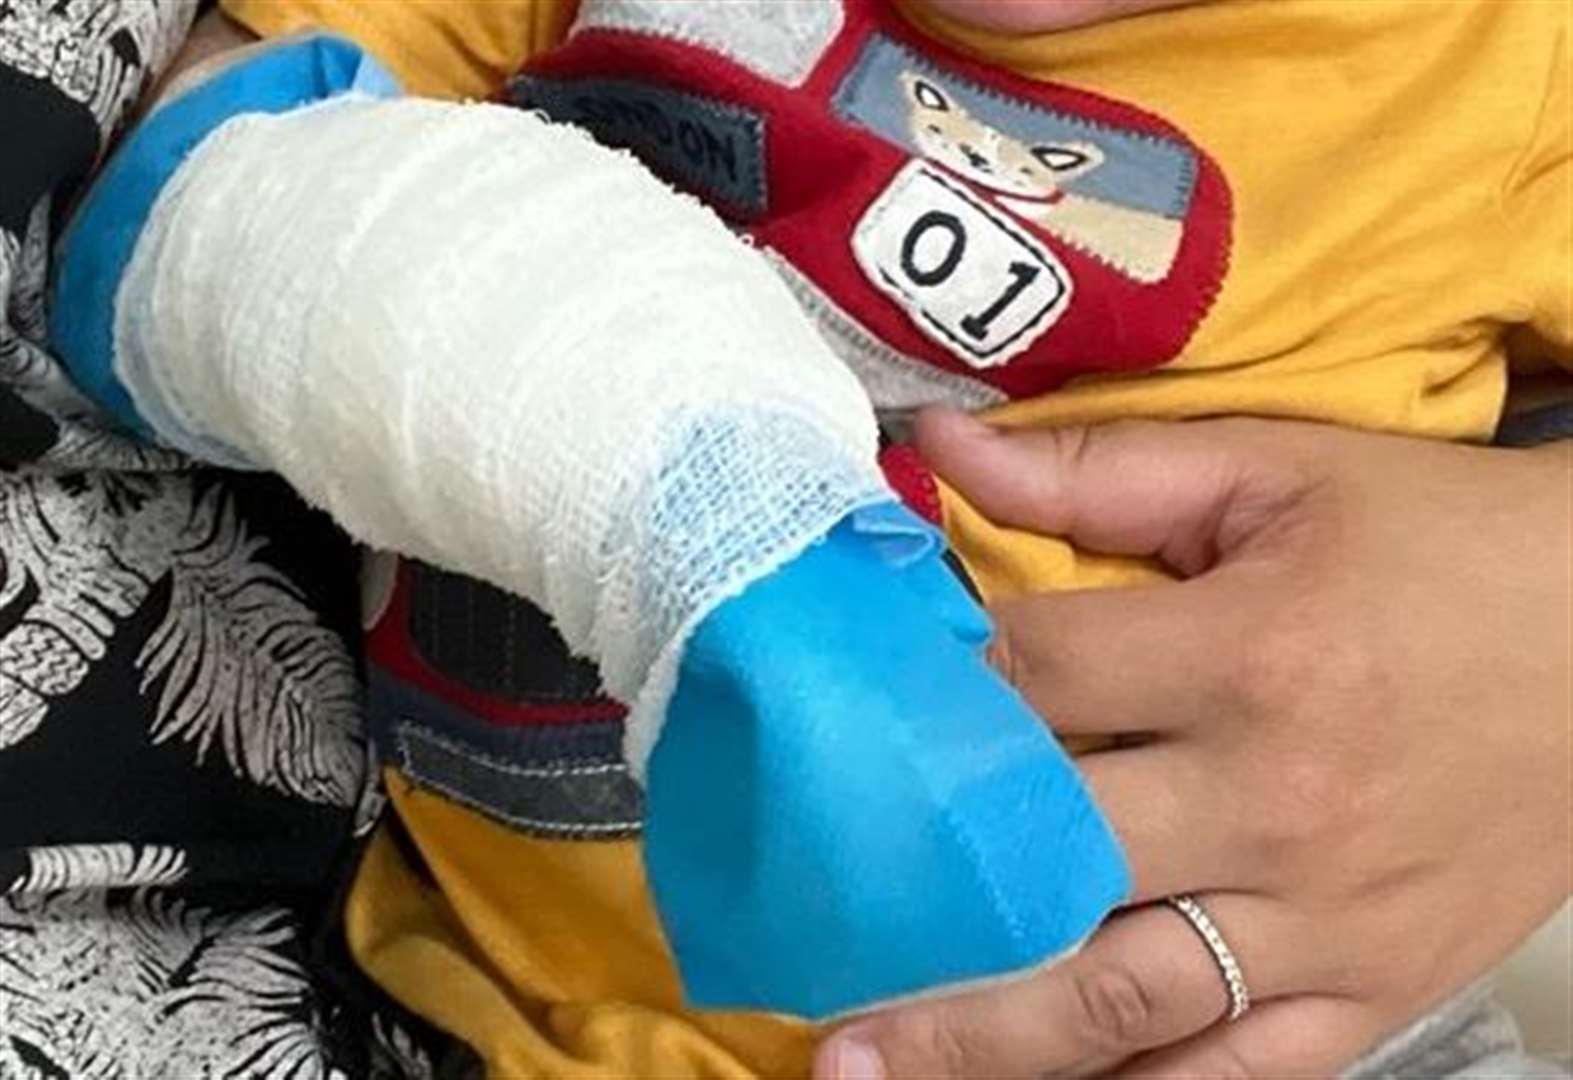 Toddler suffers second-degree burn as skate park ramp overheats